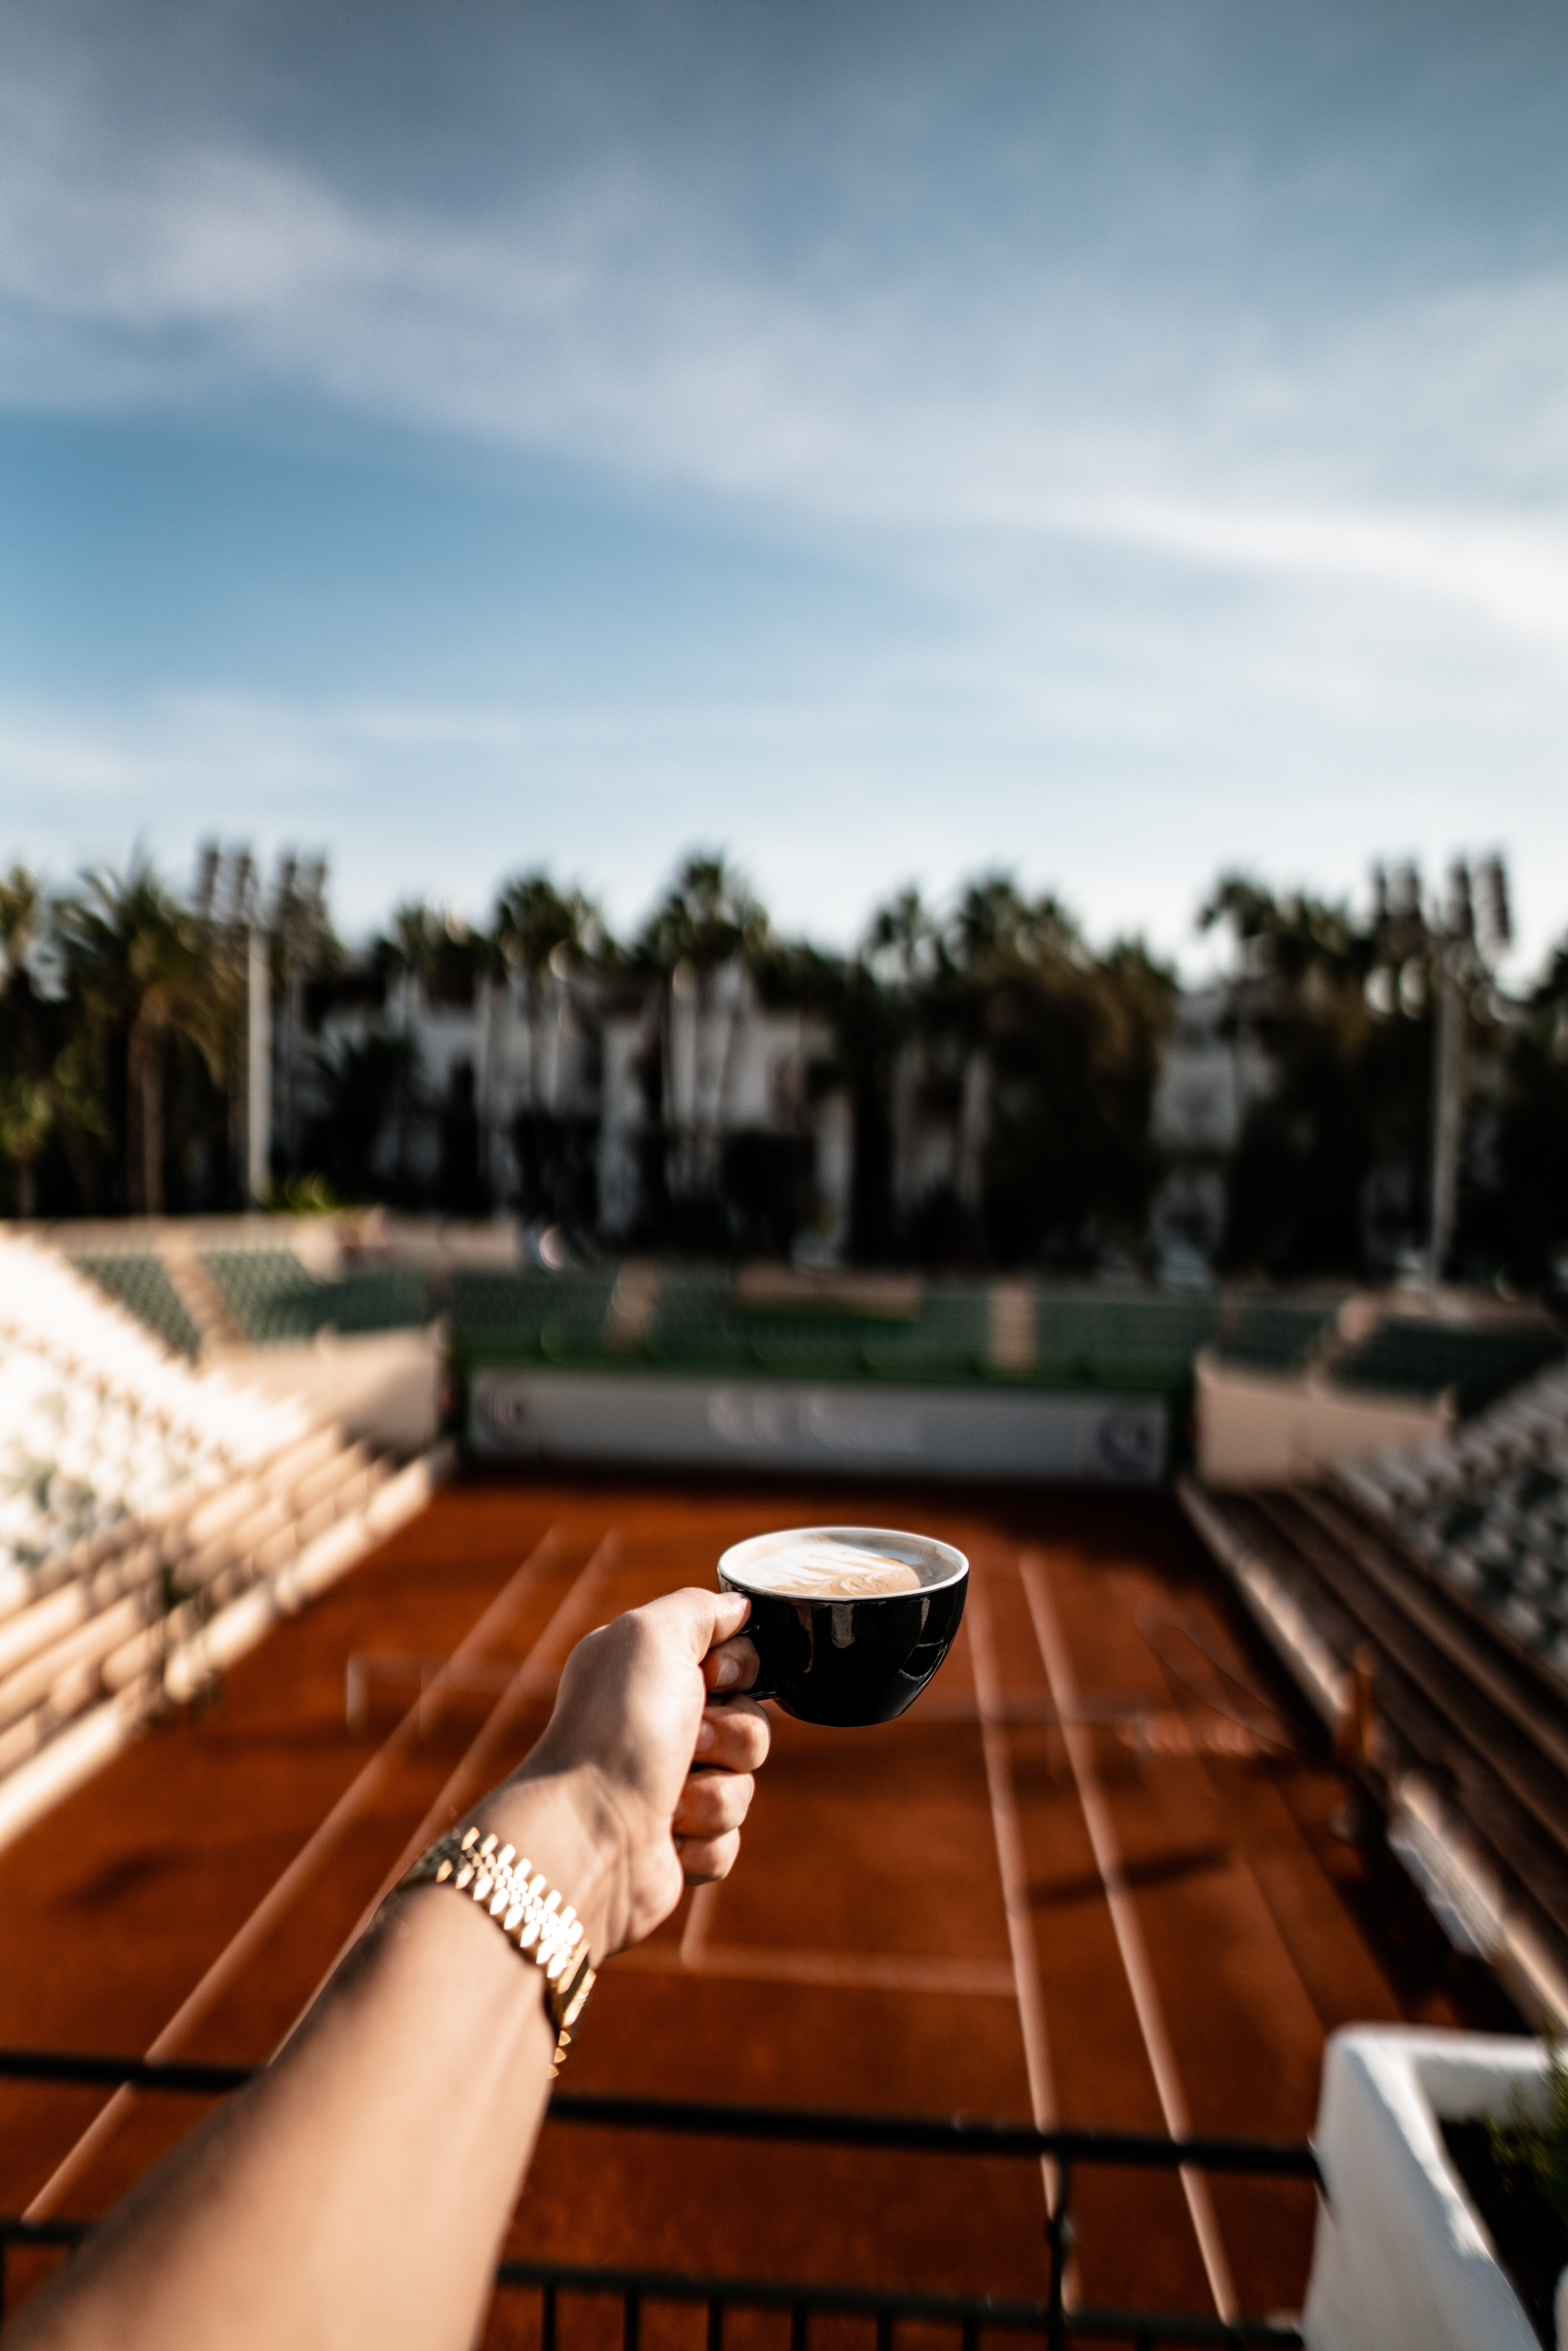 Desktop FHD miscellanea, coffee, hand, miscellaneous, cup, tennis court